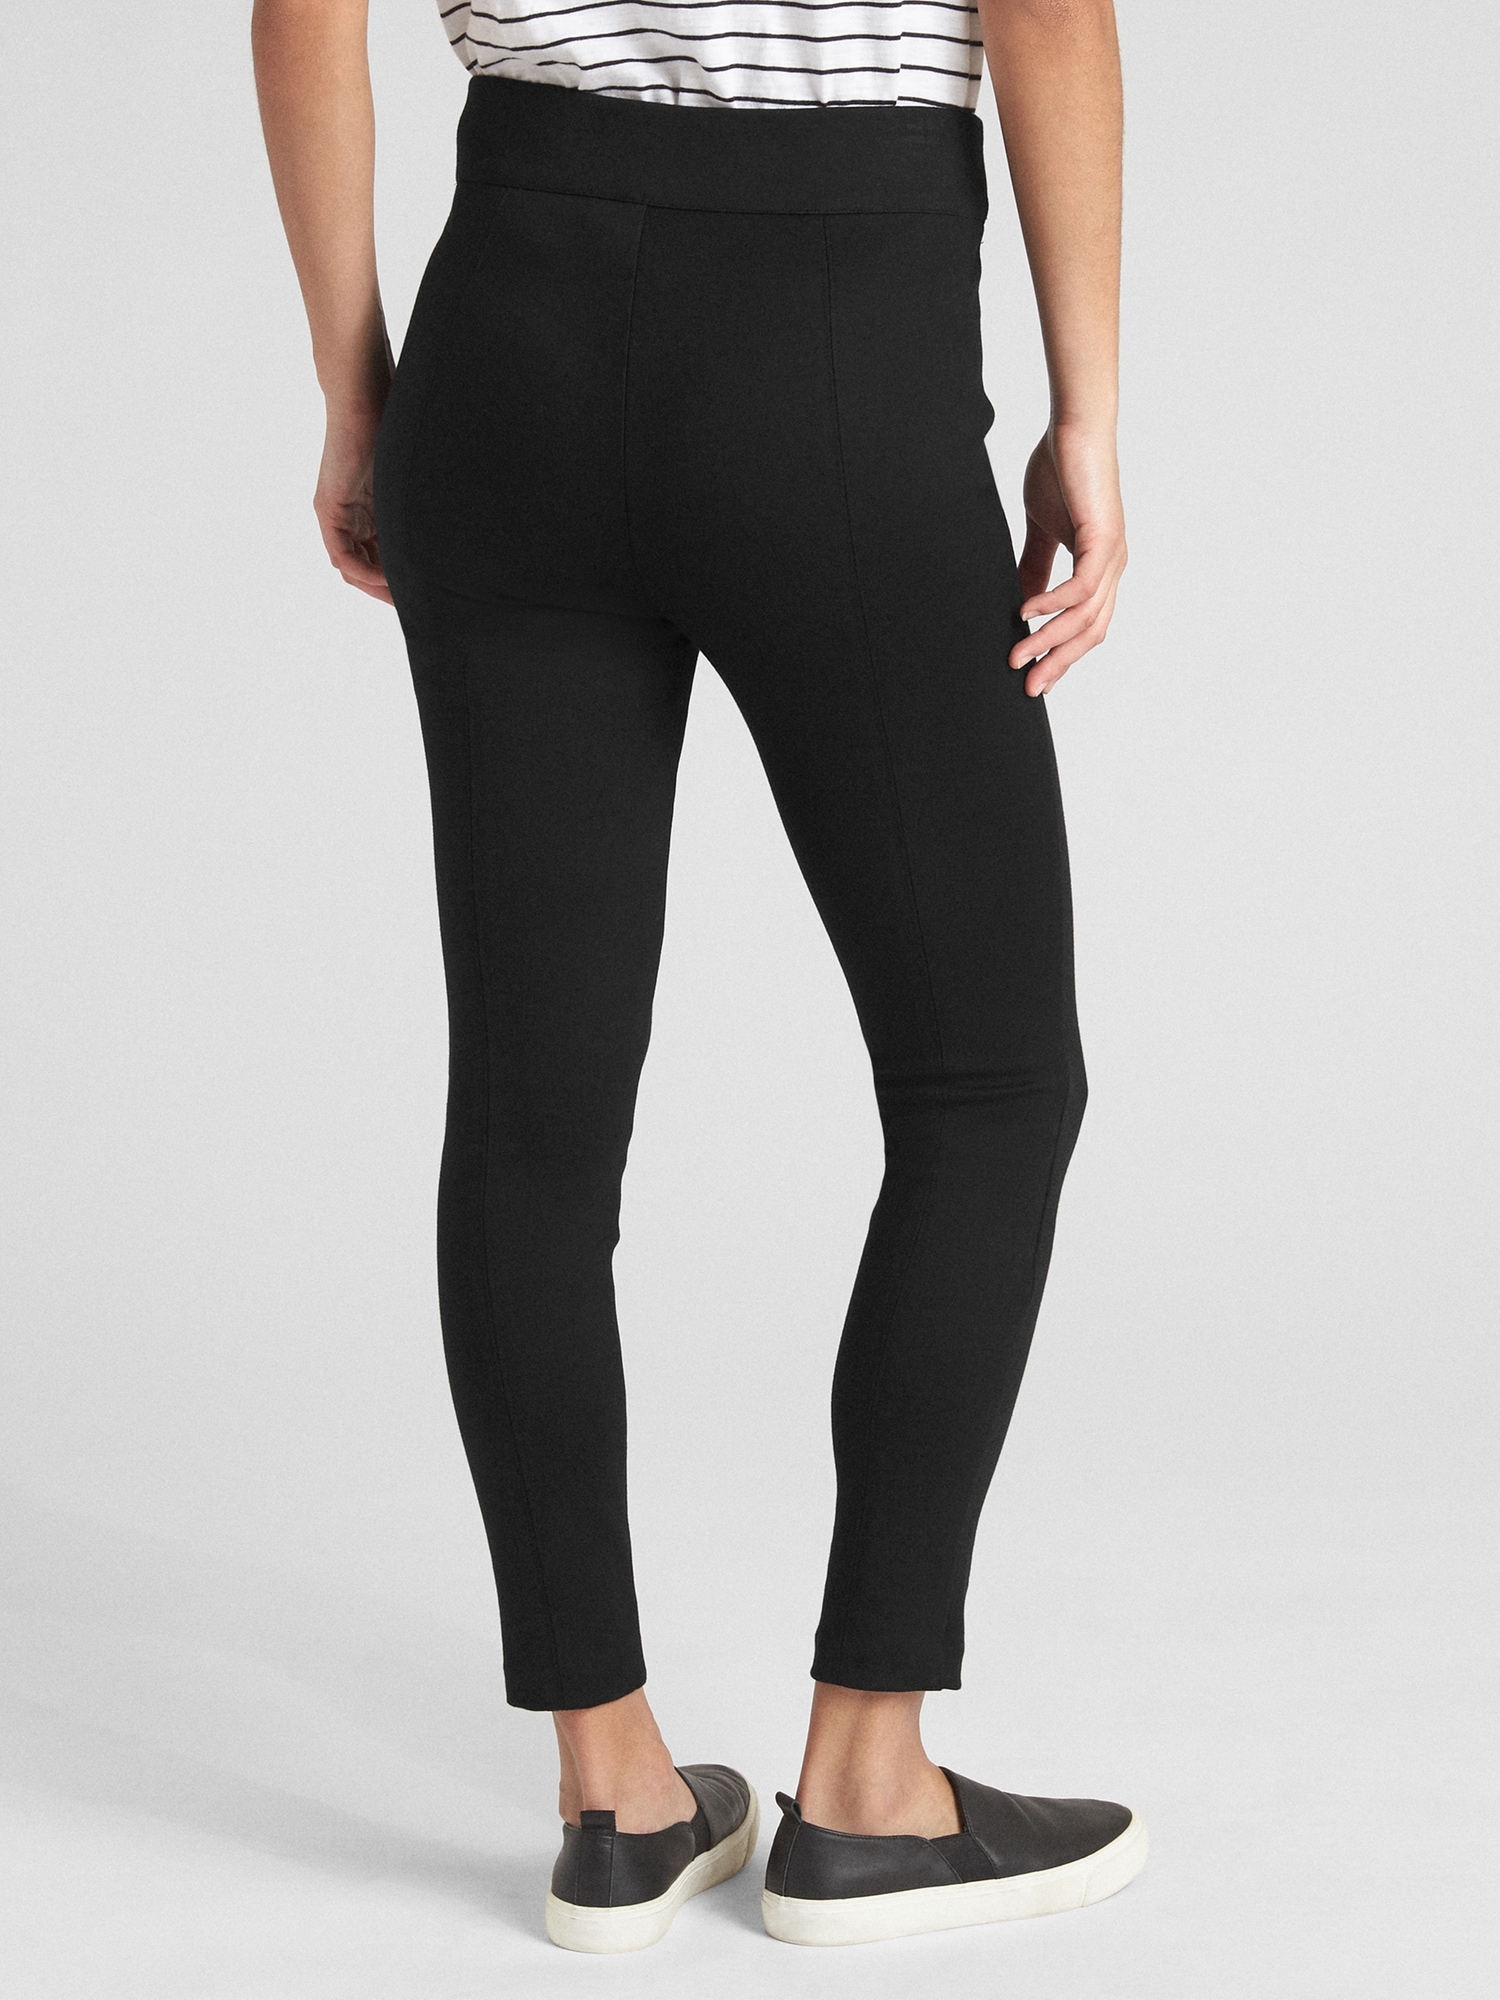 Hilary Radley Women's Narrow Leg Stretch Pull-on Slim Fit Ponte Pant SIZE  XS